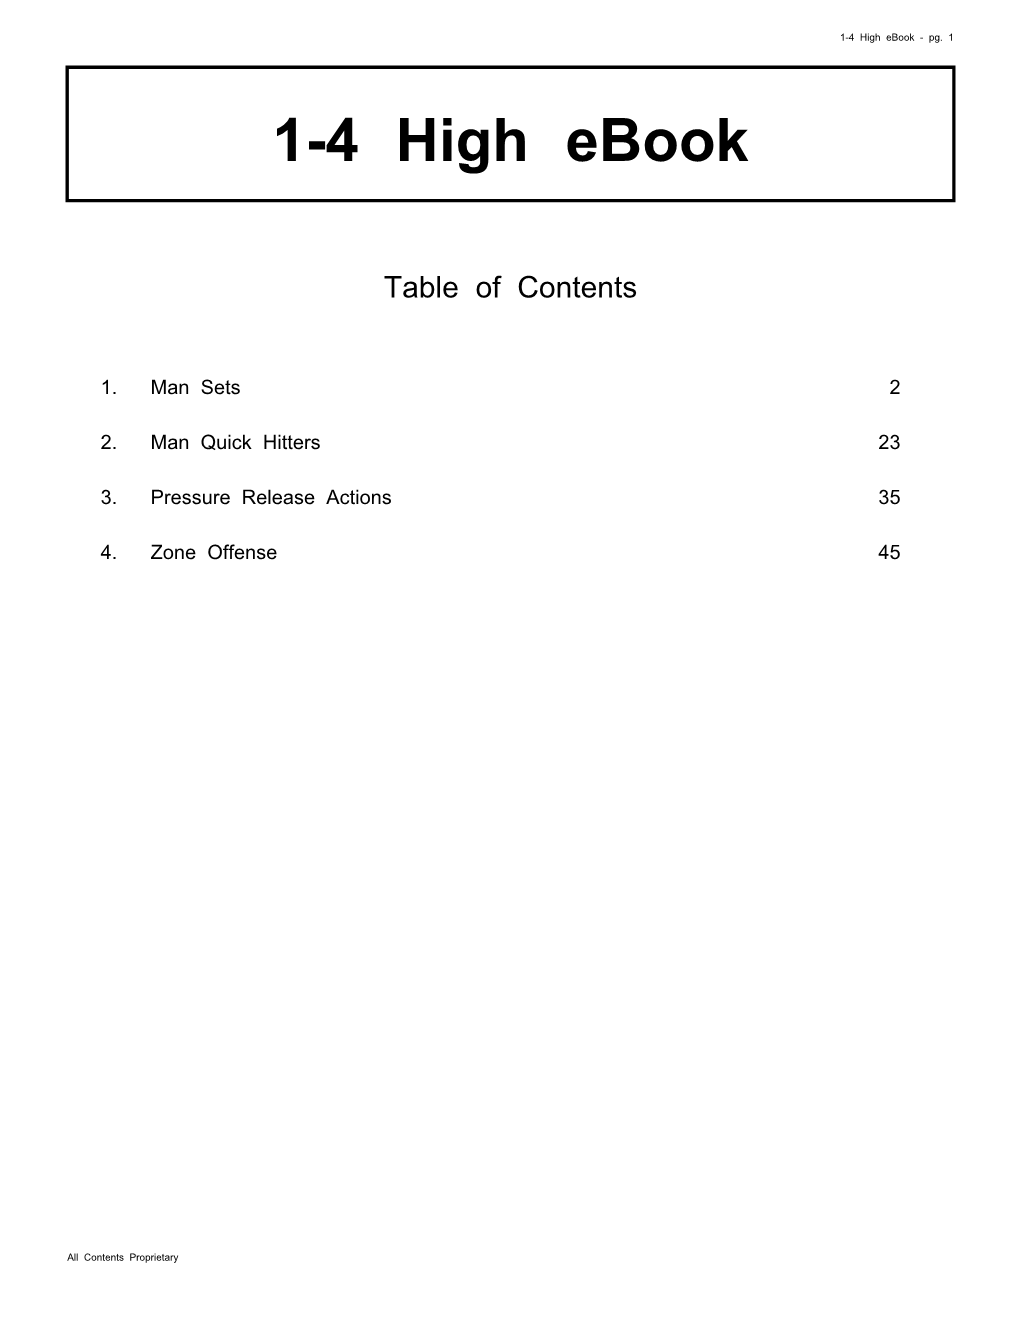 1-4 High Ebook - Pg